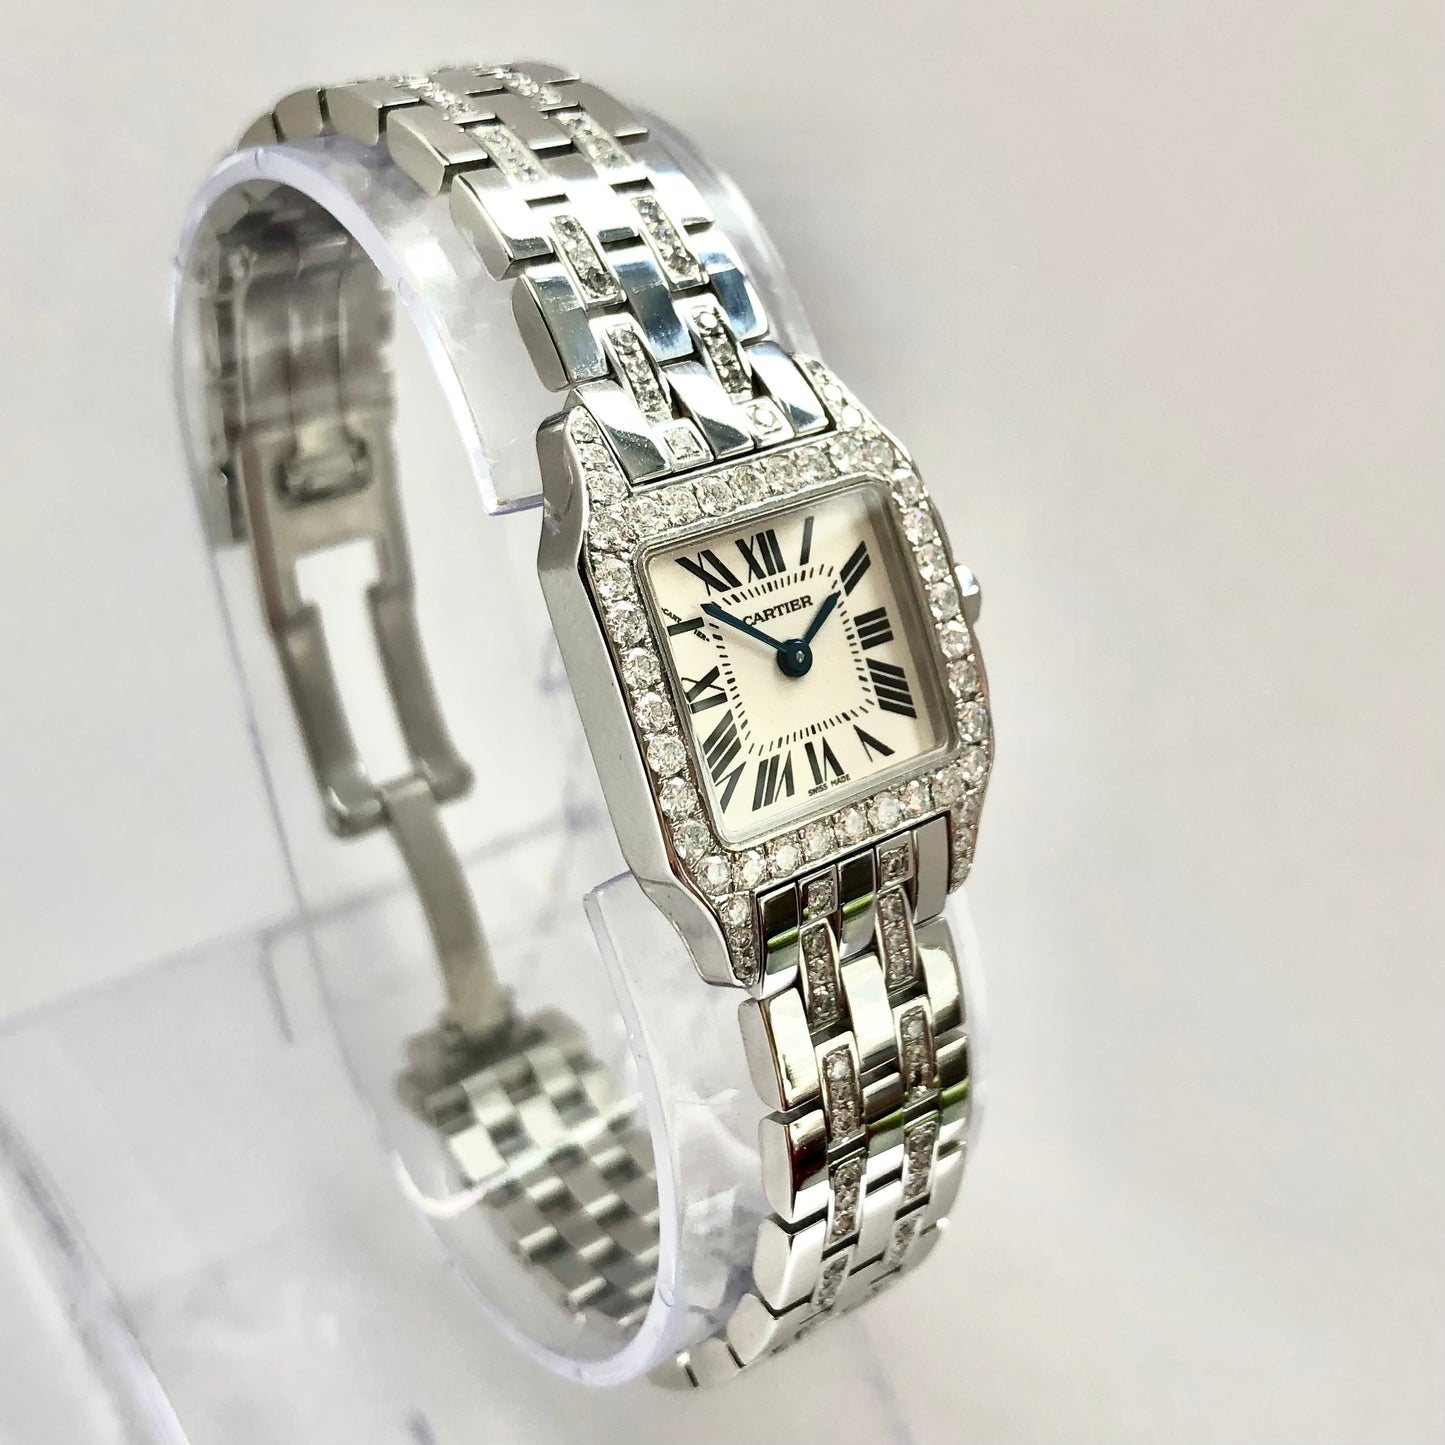 CARTIER SANTOS DEMOISELLE Quartz 20mm Steel 2.25TCW Diamond Watch